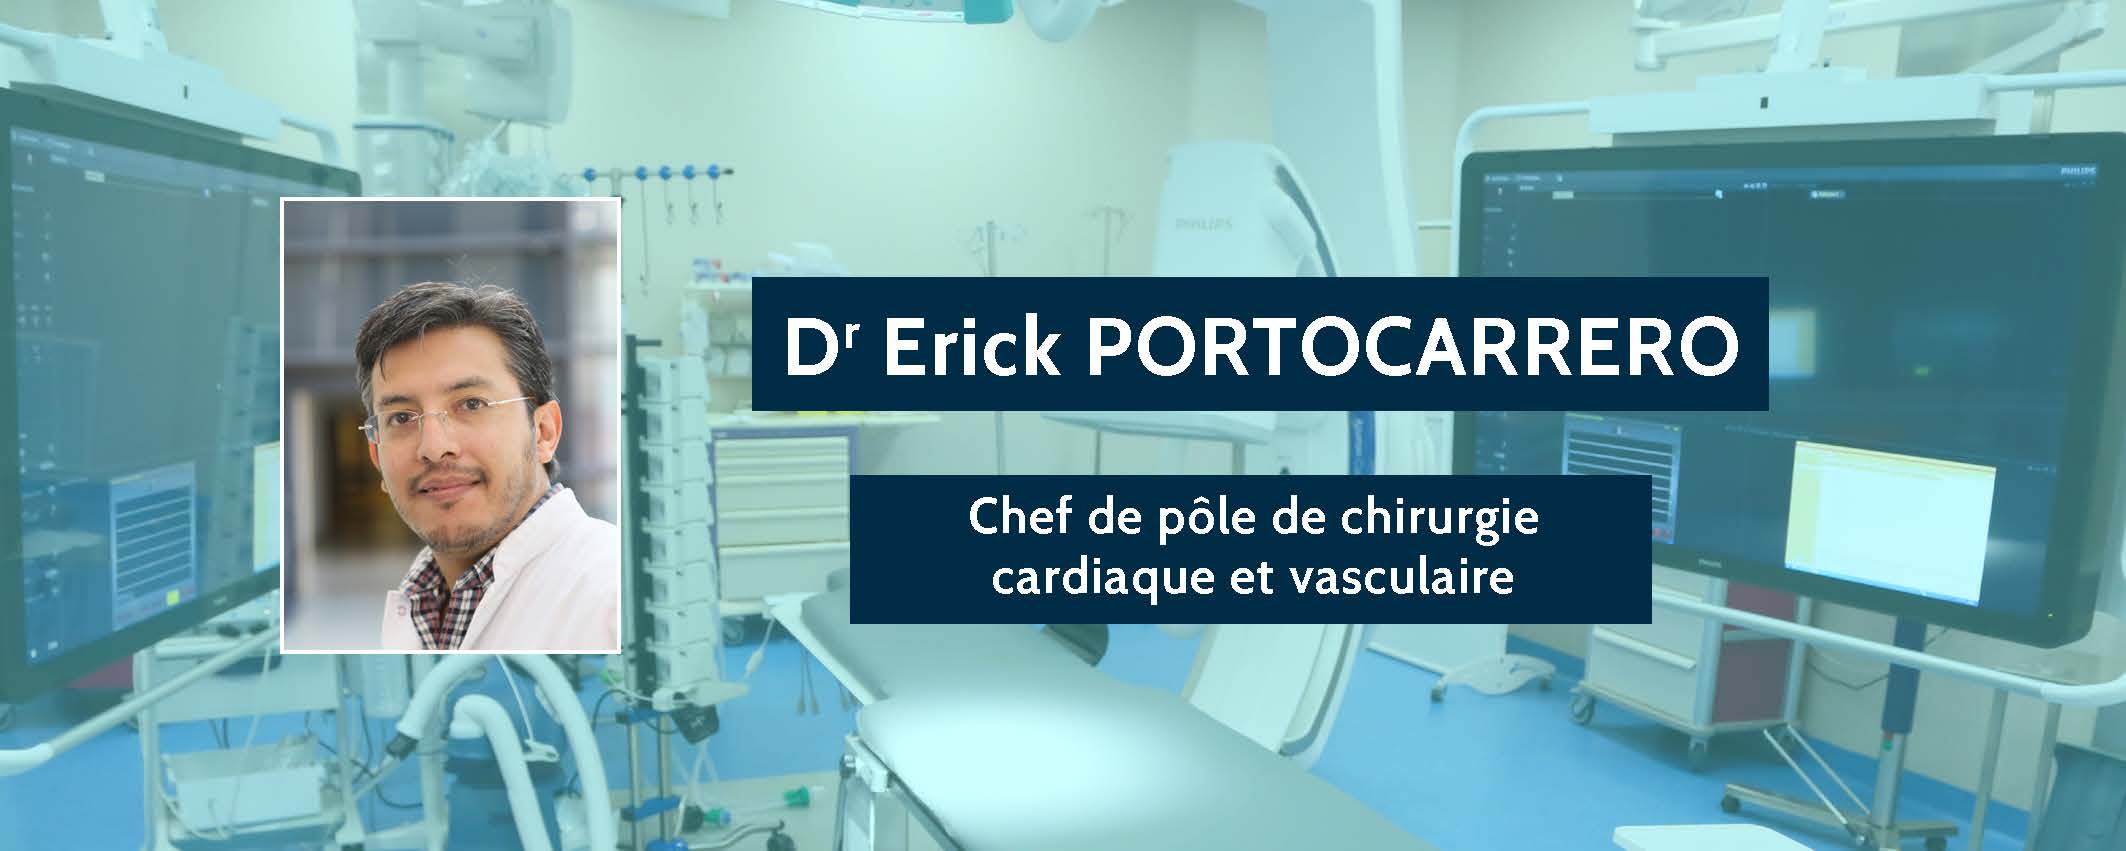 Docteur Portocarrero